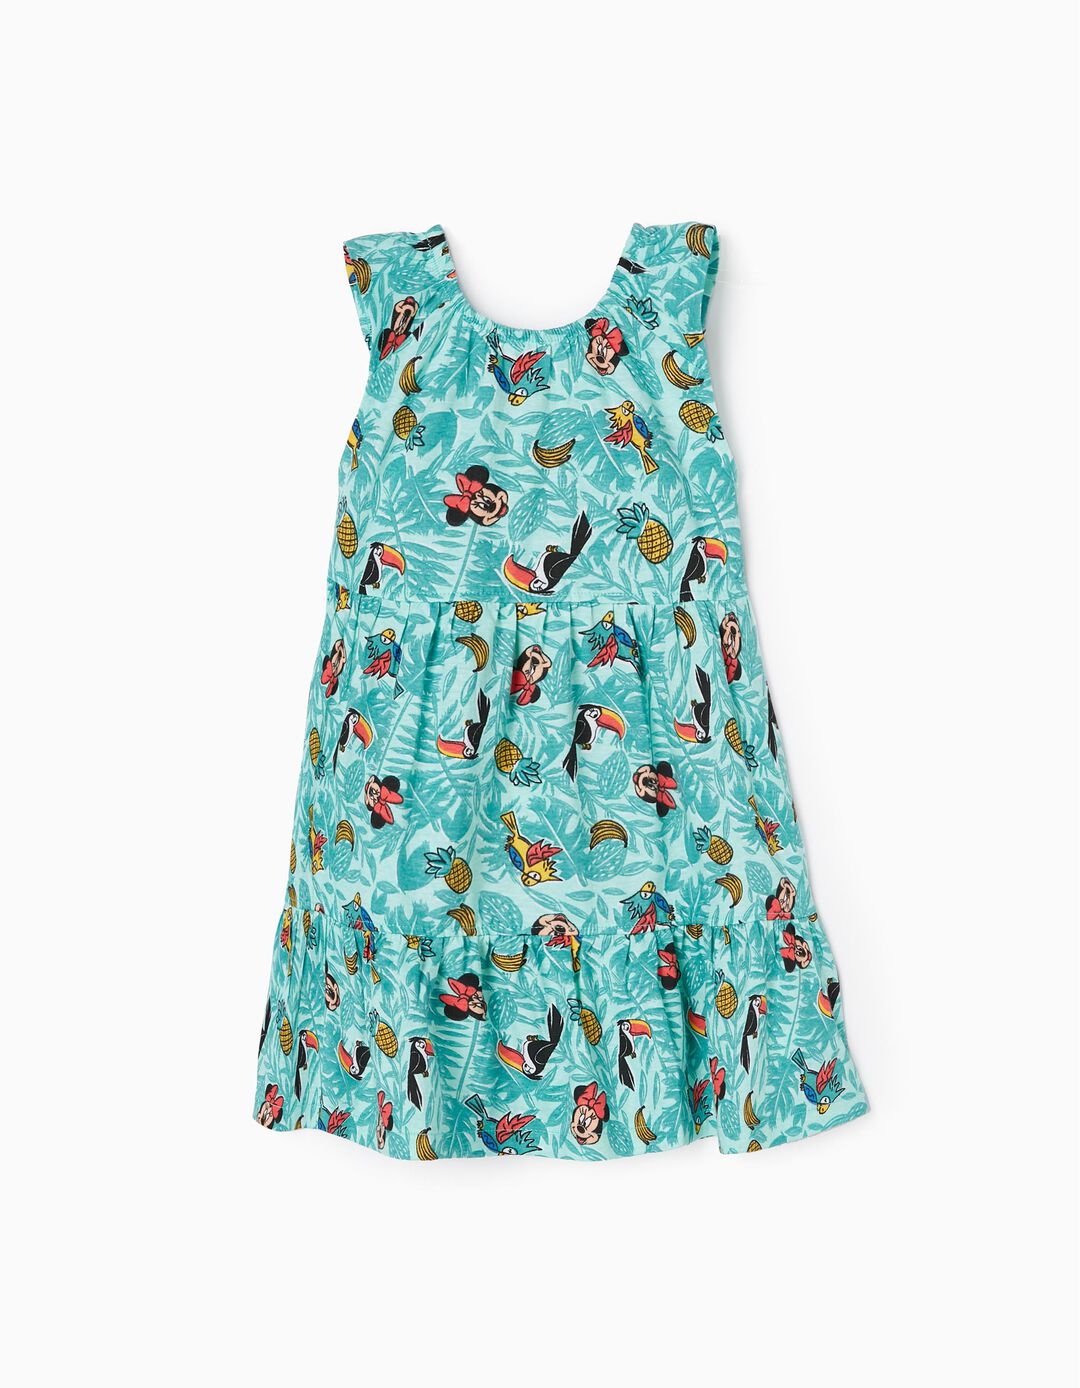 Cotton Dress for Baby Girls 'Minnie', Aqua Green